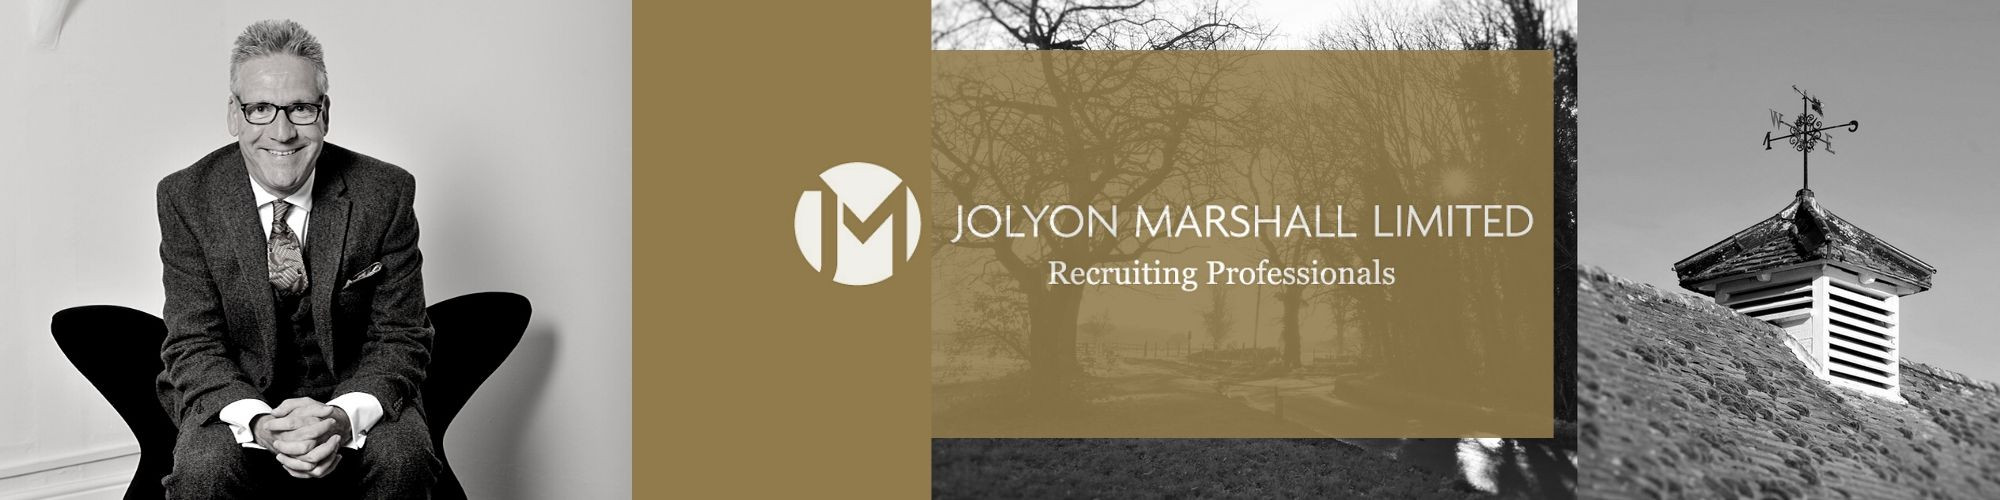 Jolyon Marshall Limited